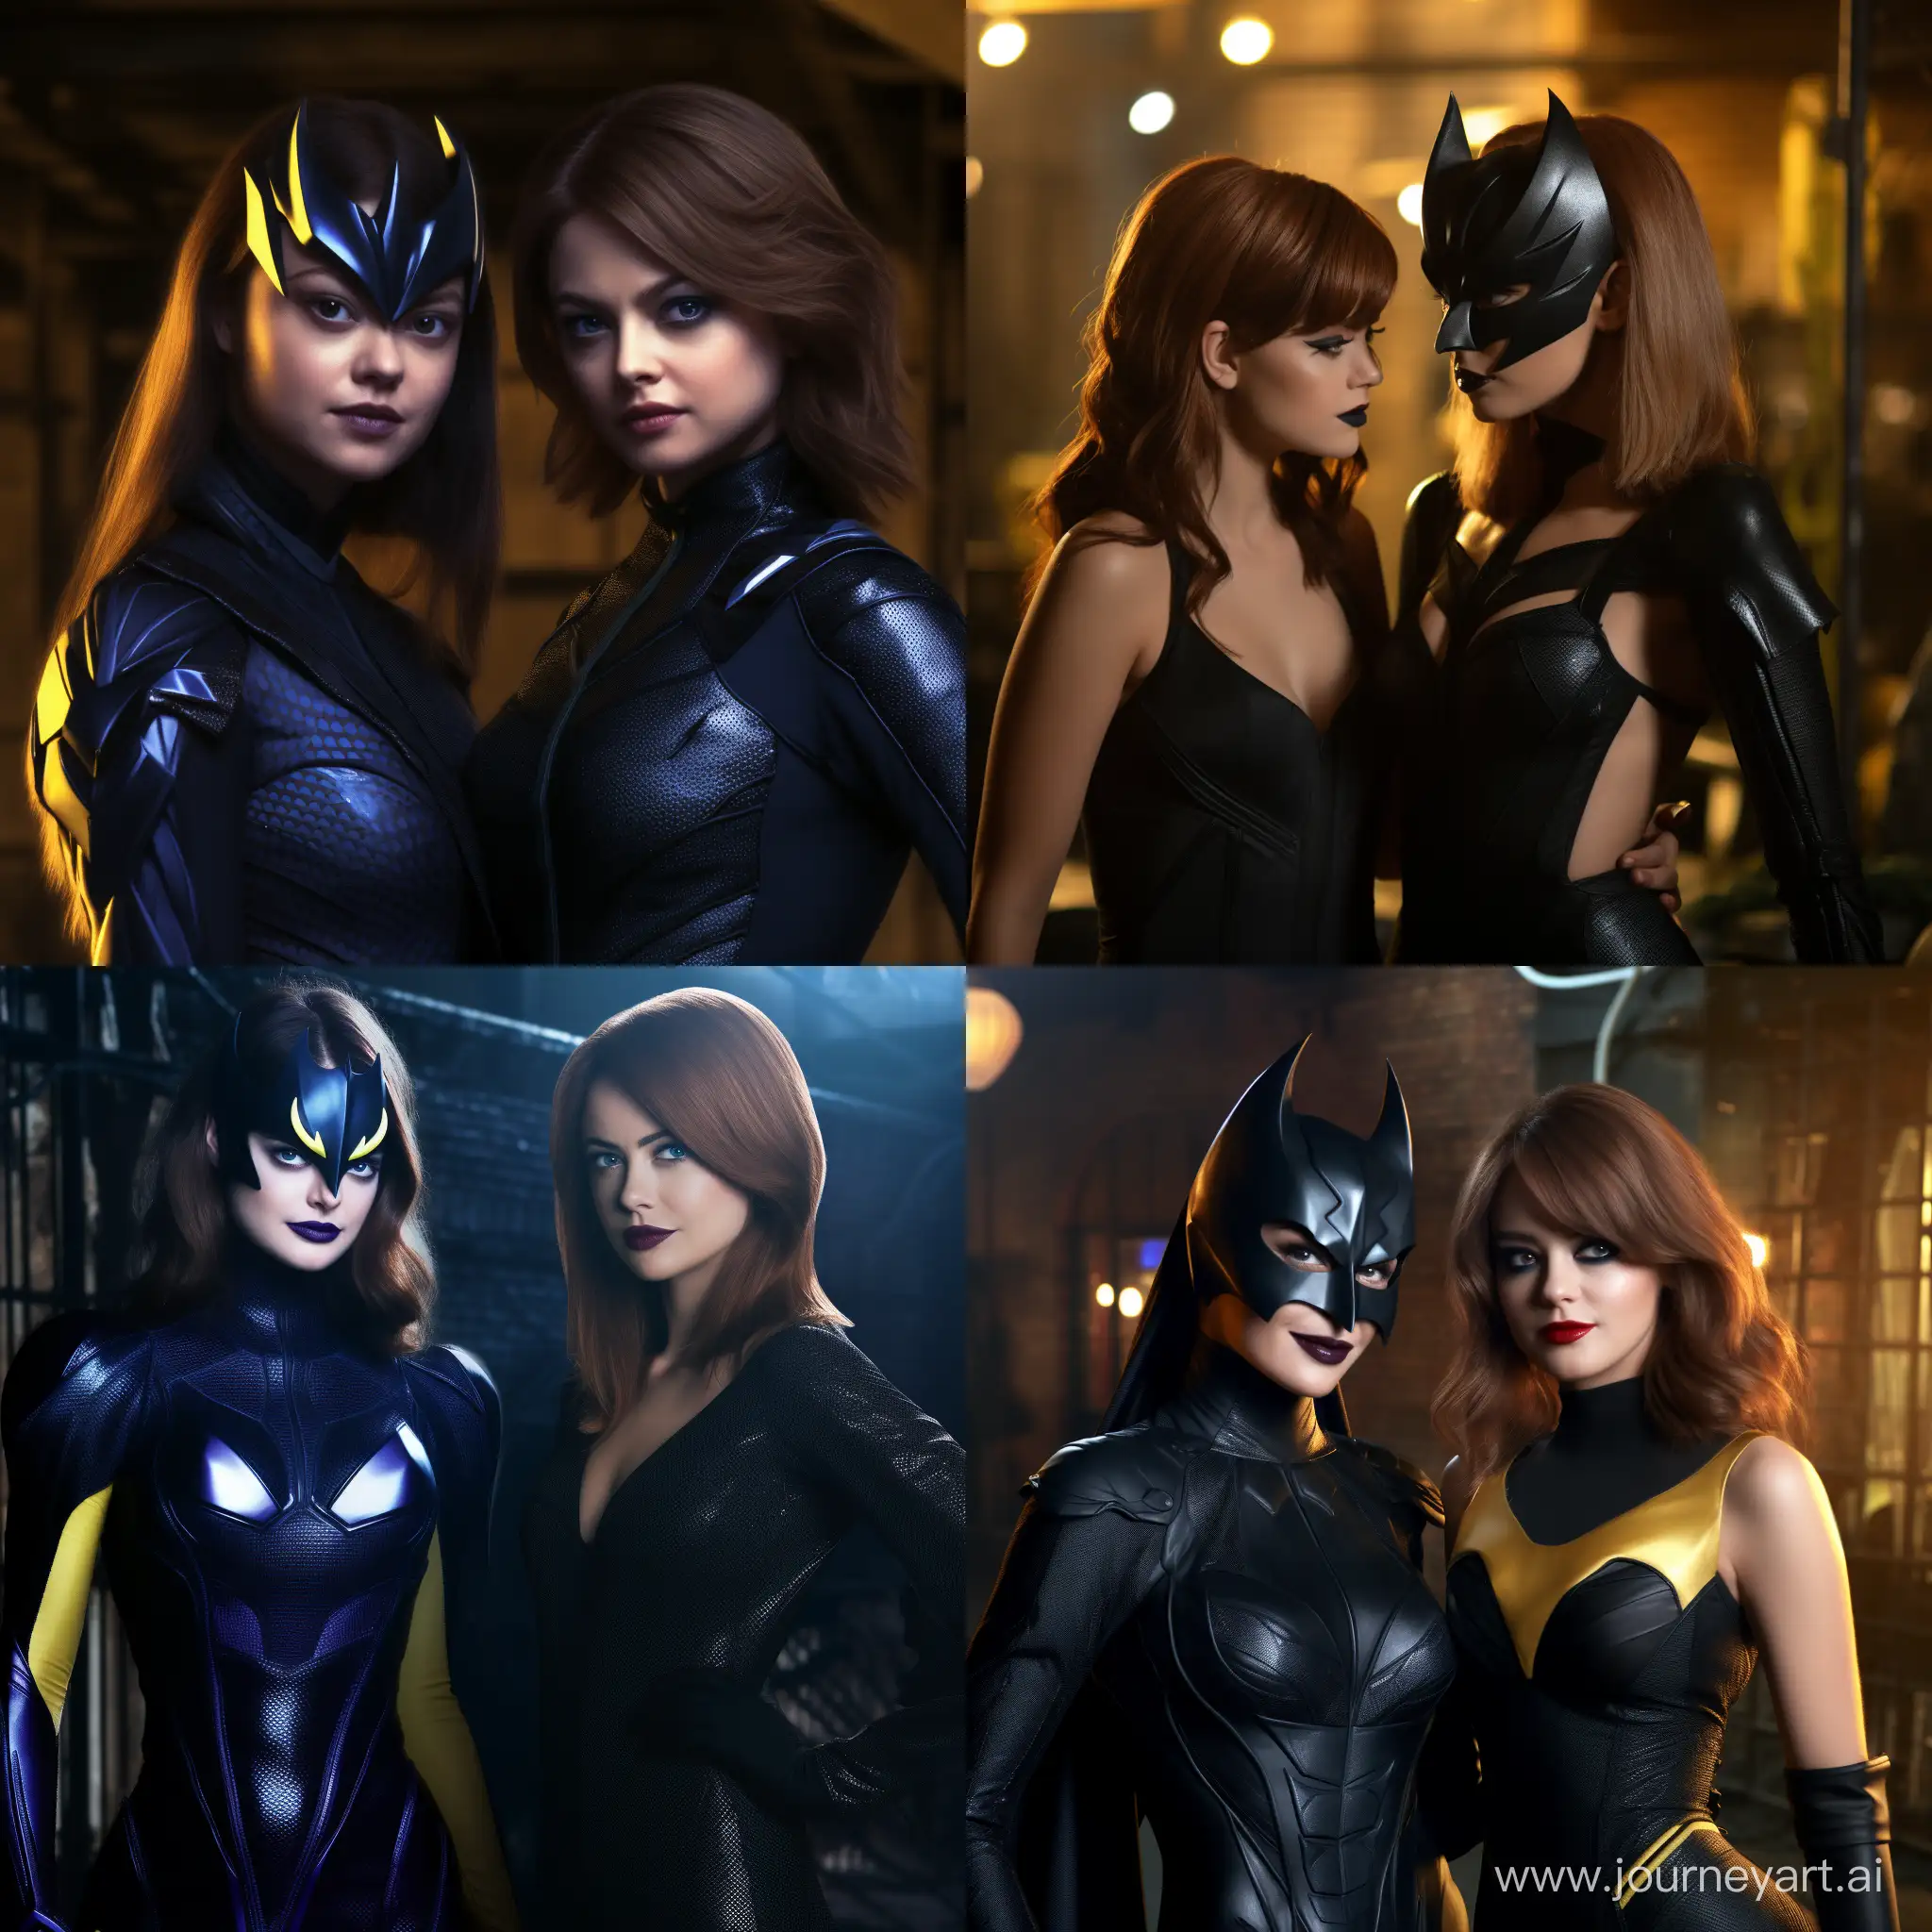 Selena-Gomez-and-Emma-Stone-Transform-into-Batgirl-in-Stunning-8K-Movie-Scene